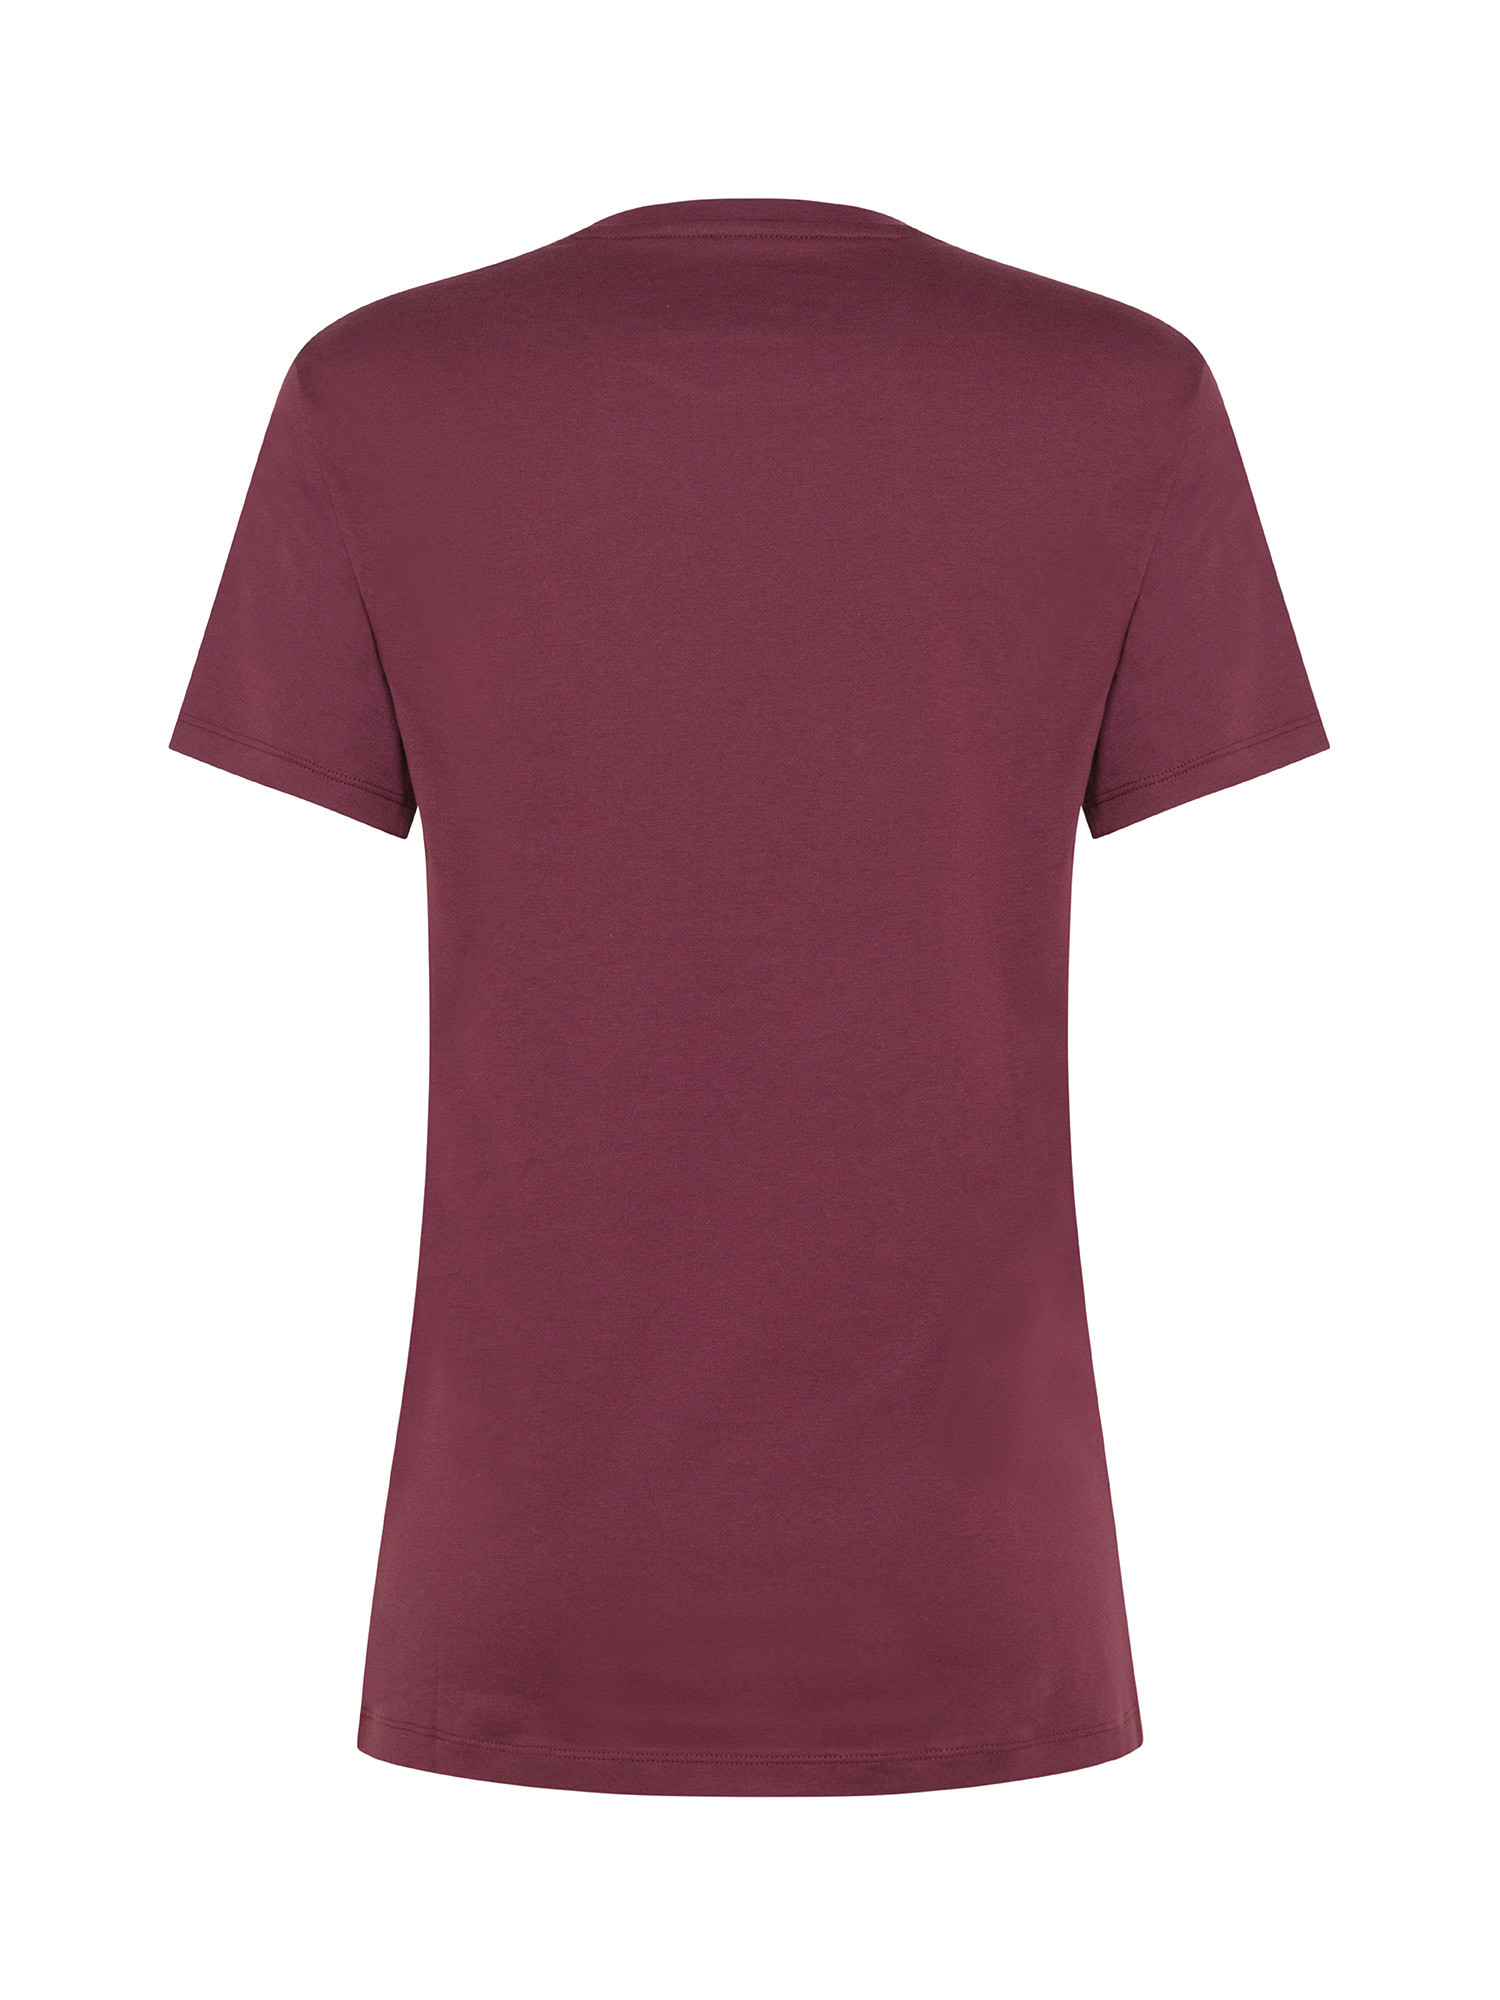 T-shirt, Rosso bordeaux, large image number 1